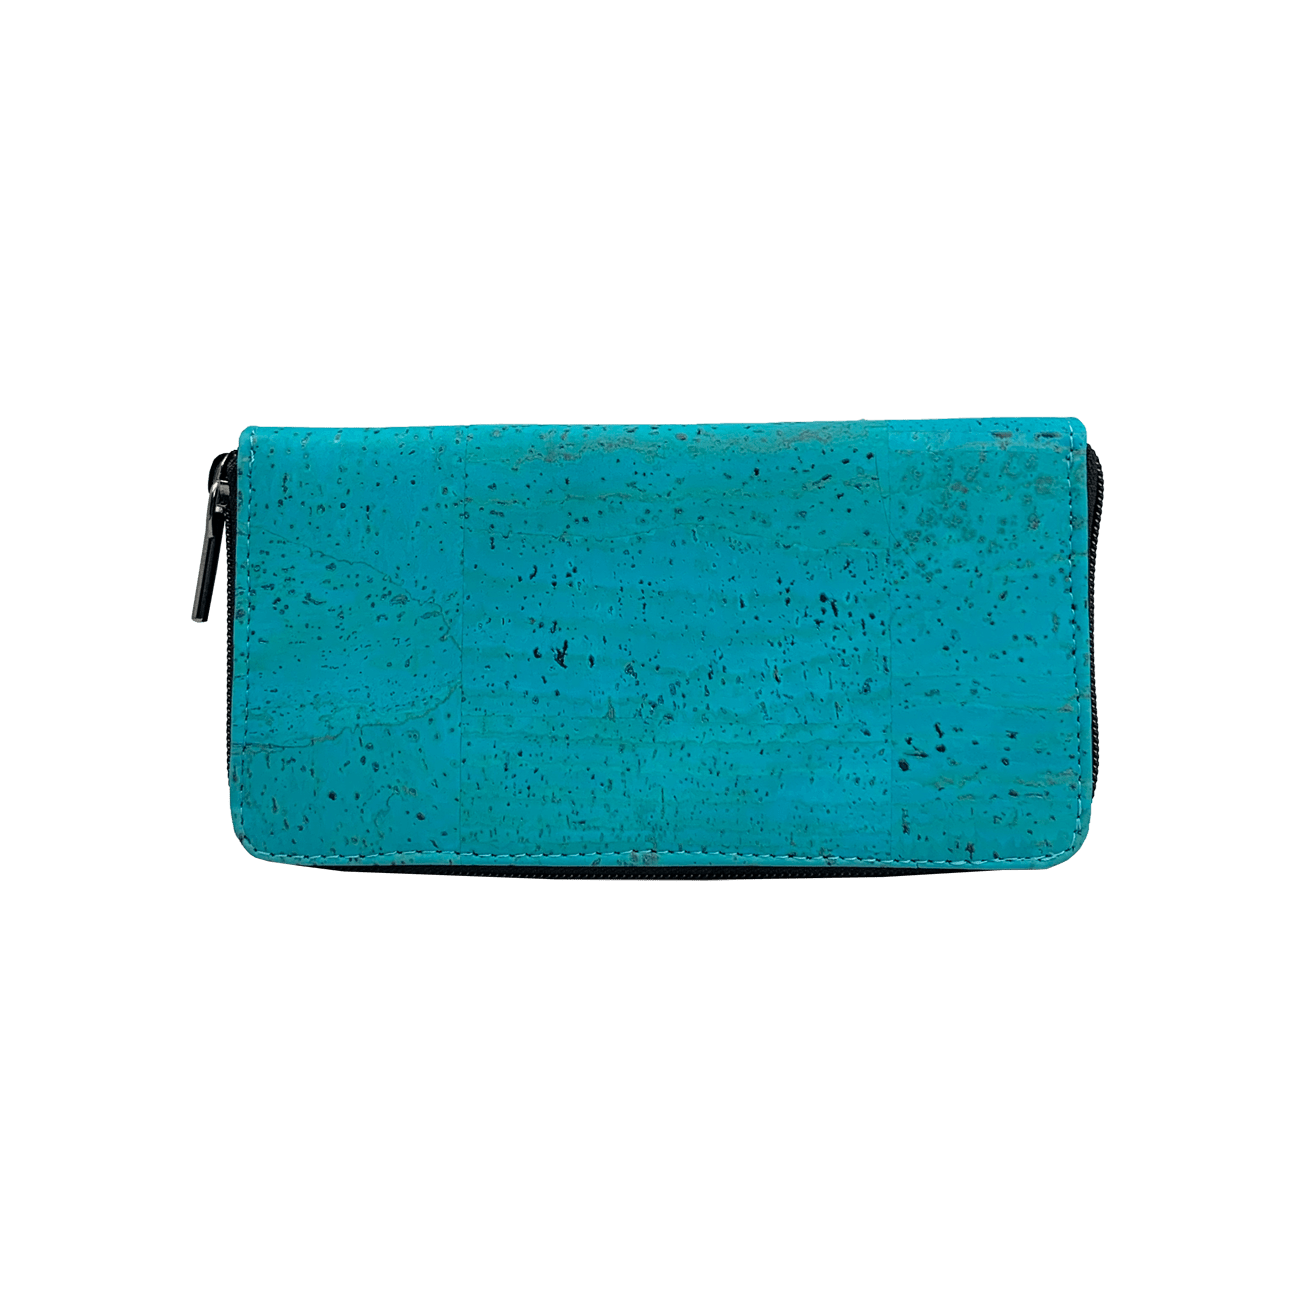 CorkHouse Wallet Light Blue Zip Around Cork Wallet